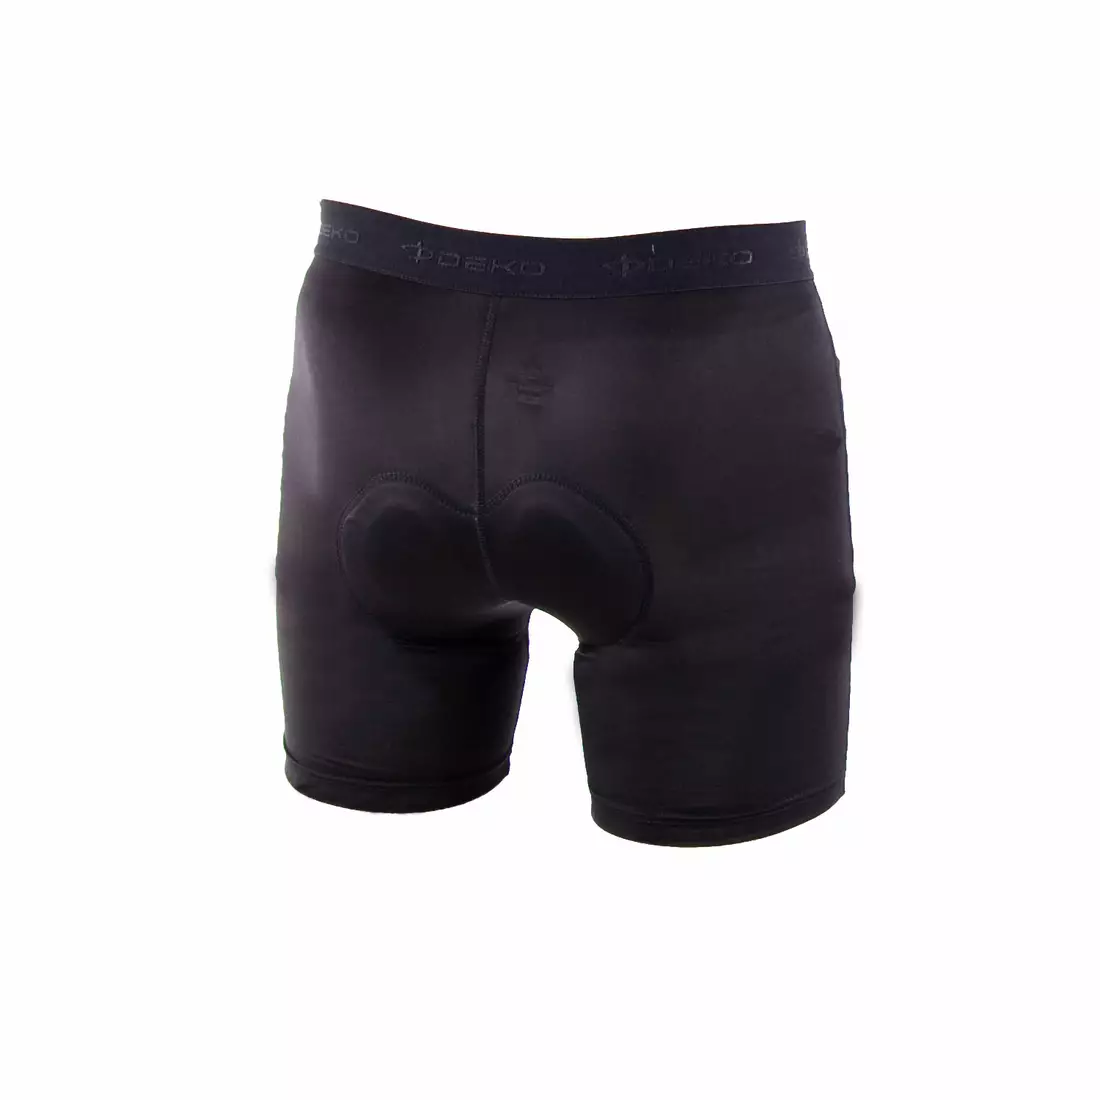 DEKO pantaloni scurți de ciclism cu inserție 3D GEL negru BX-001